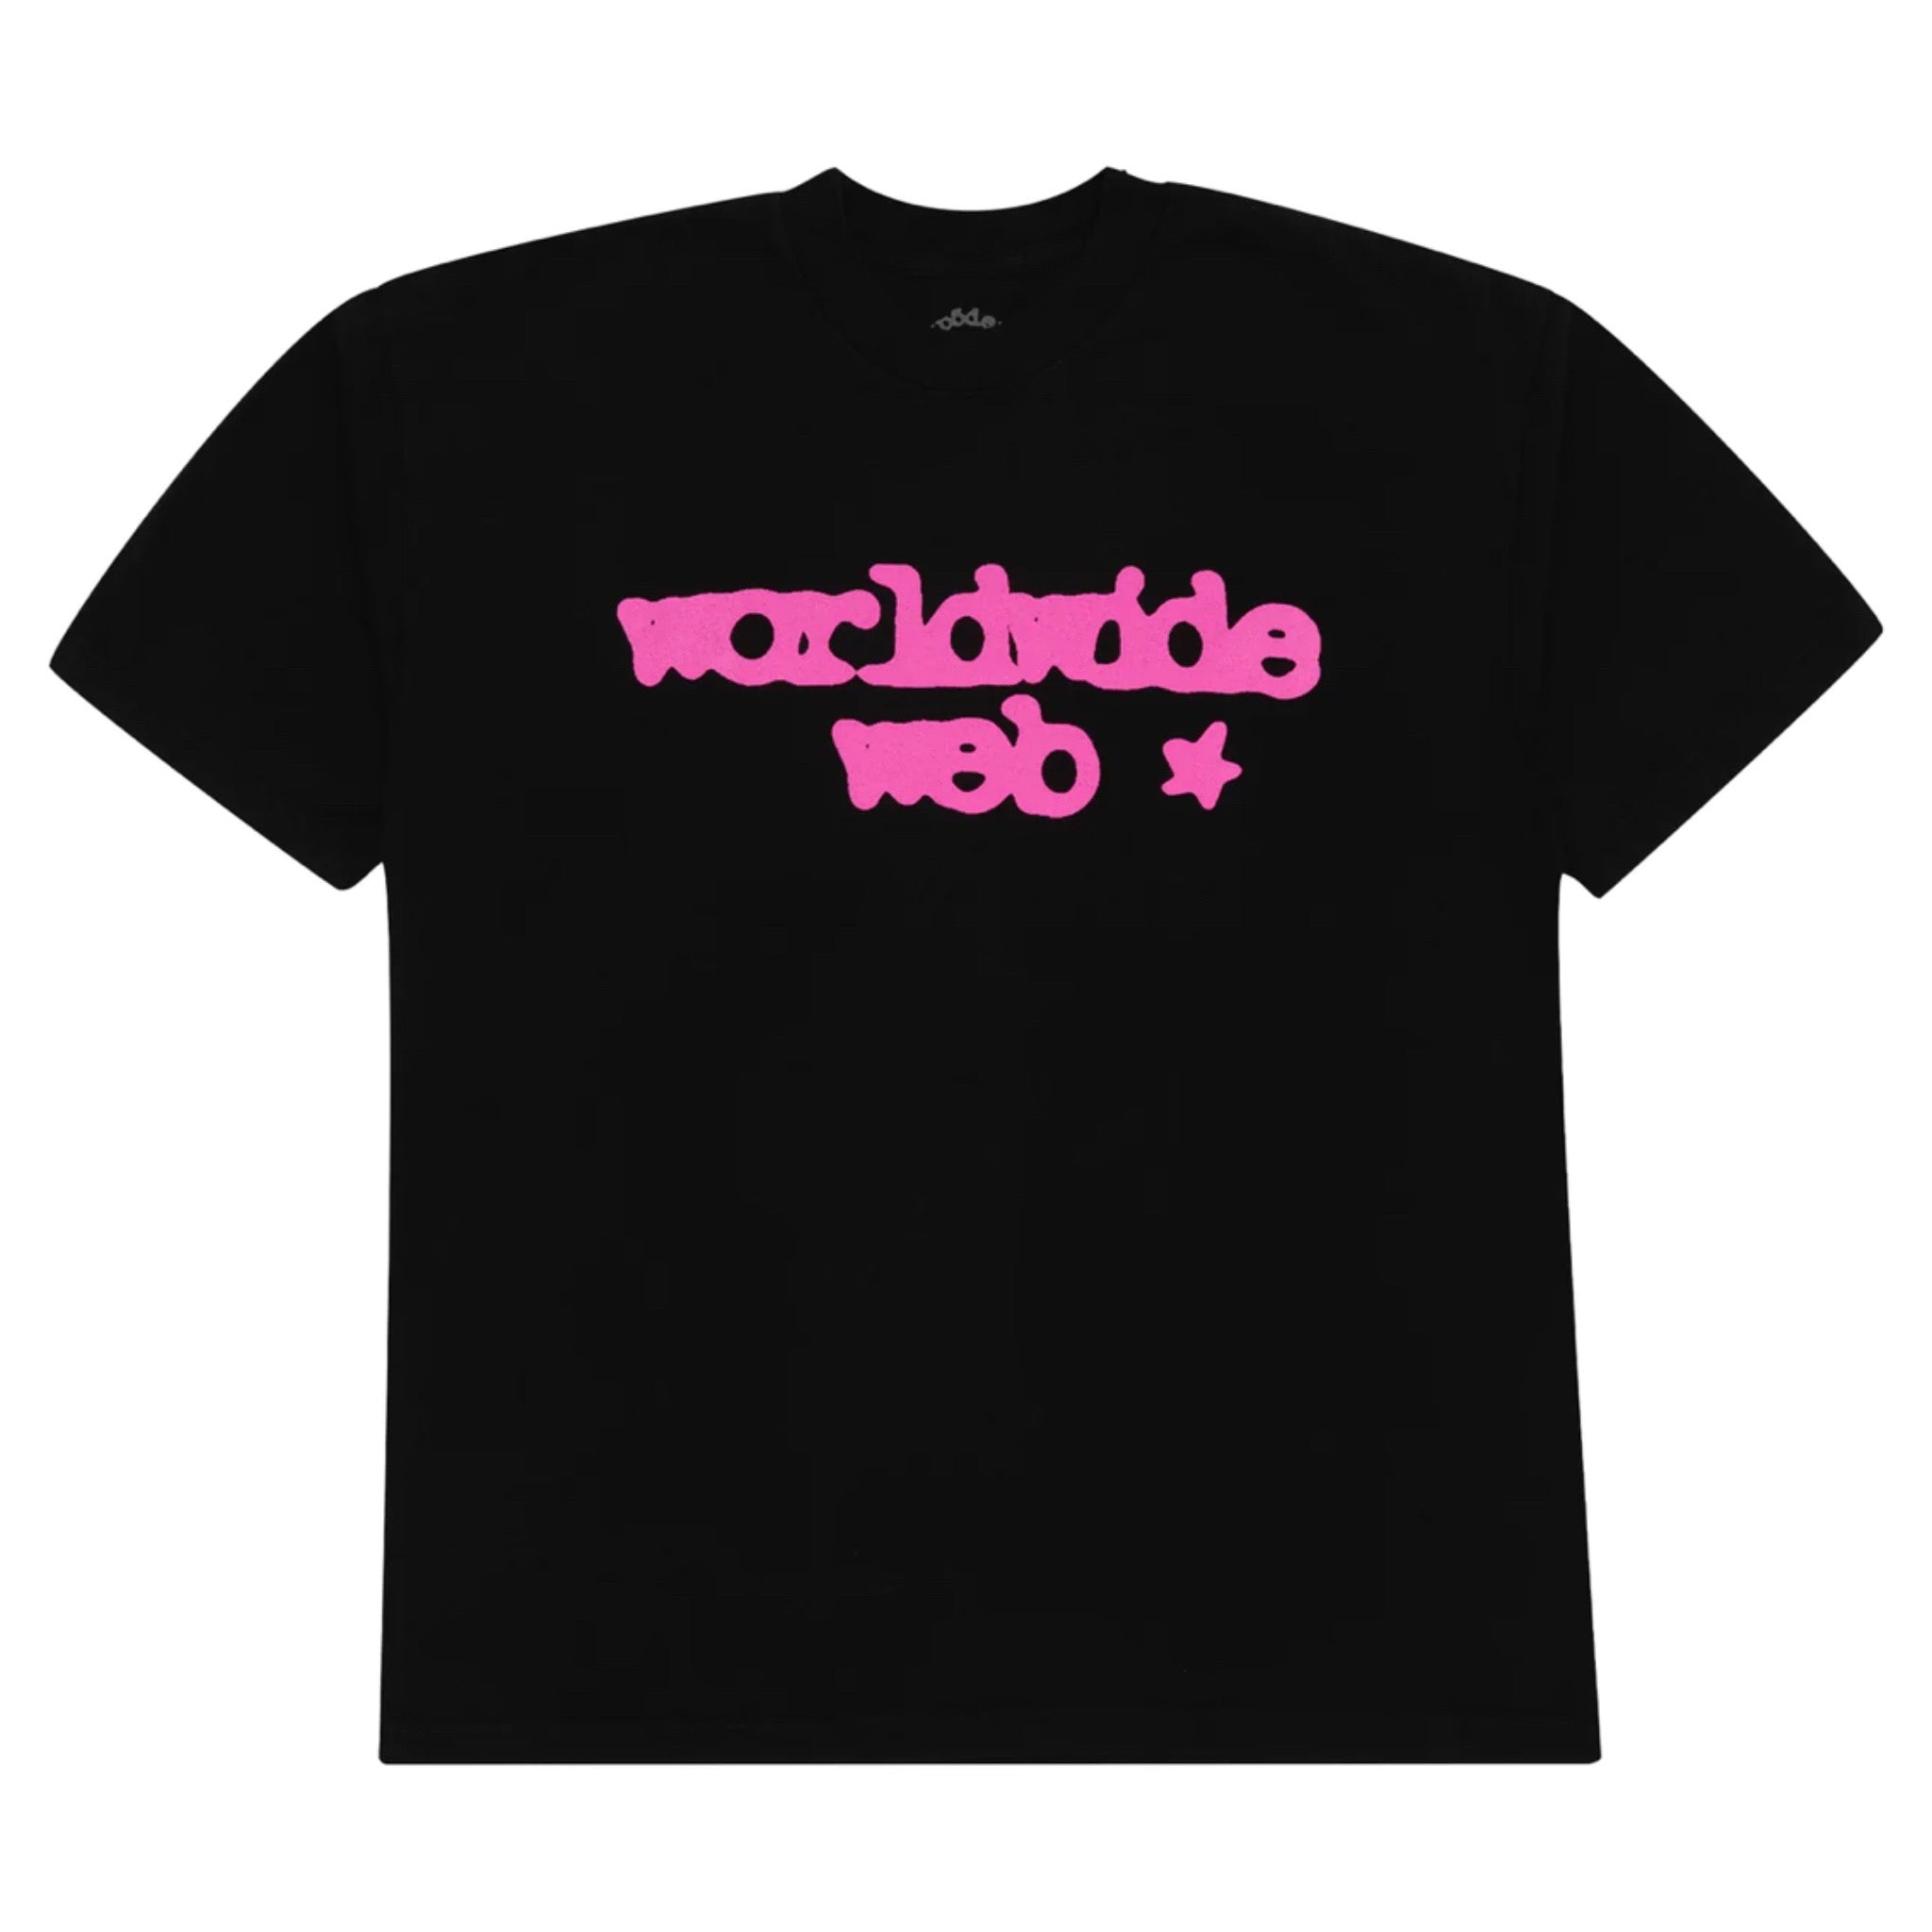 Sp5der Worldwide Web Shirt - Black/Pink Graphic Shirt